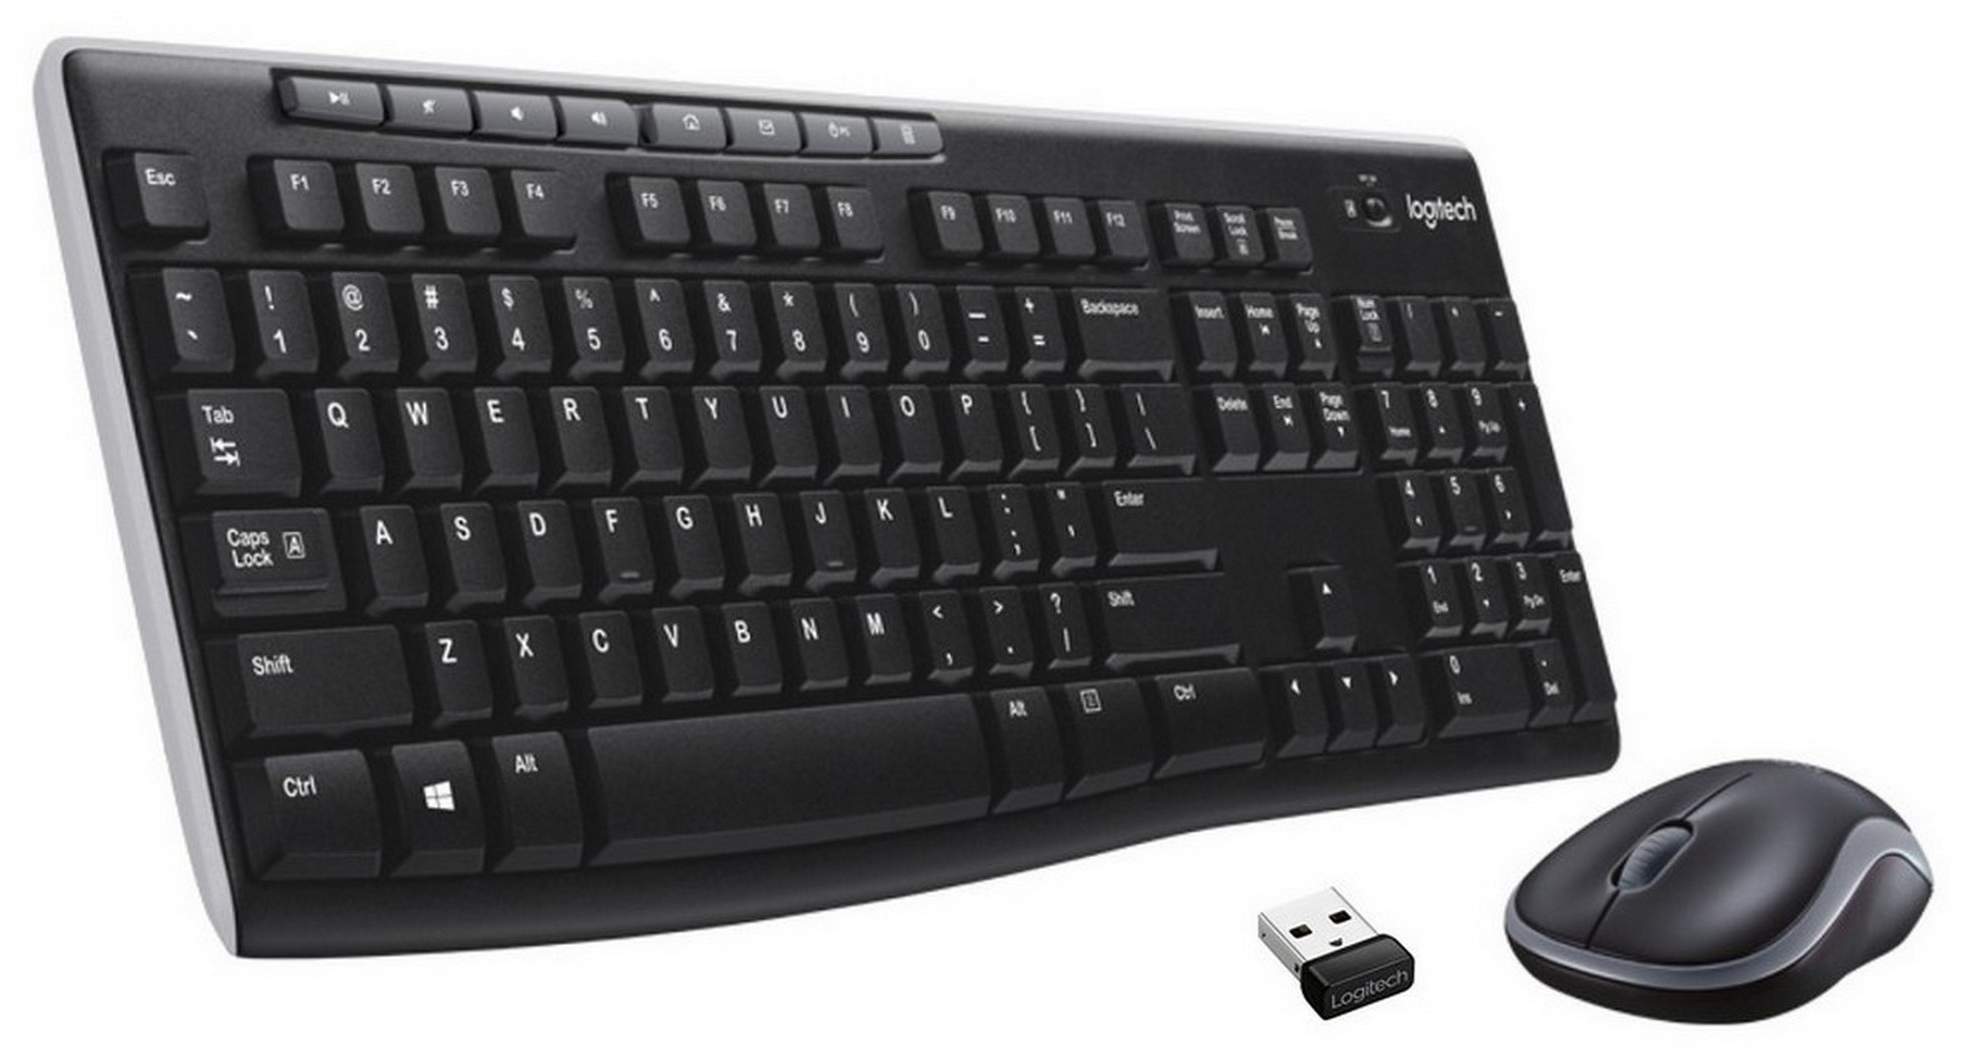 Комплект клавиатура + мышь Logitech Wireless Combo MK270